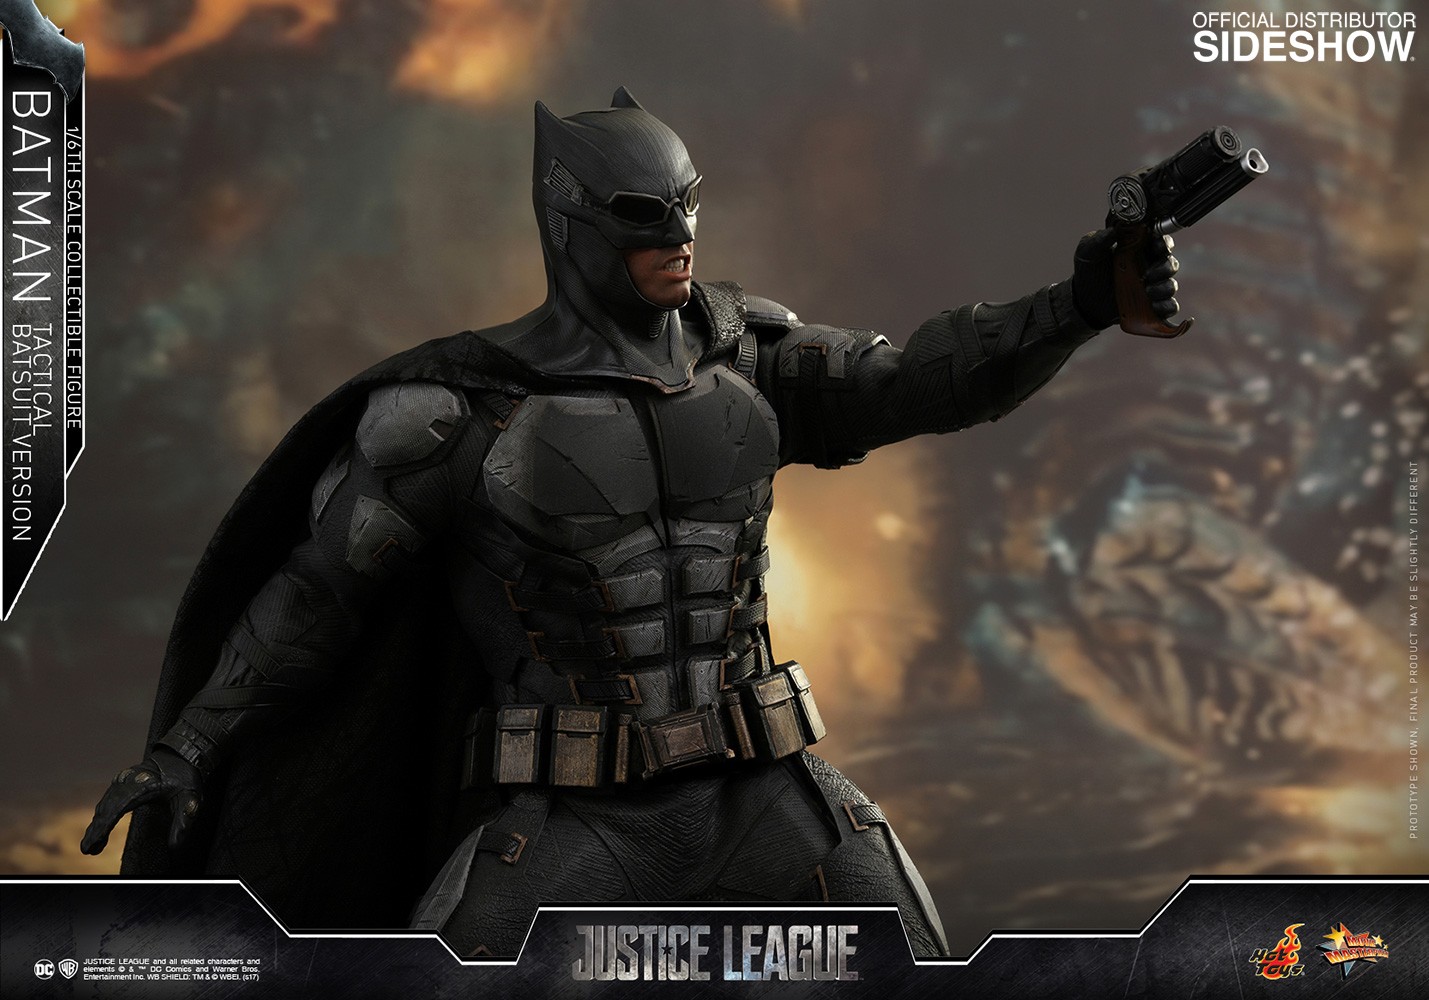 Batman Tactical Batsuit Version Collector Edition (Prototype Shown) View 10